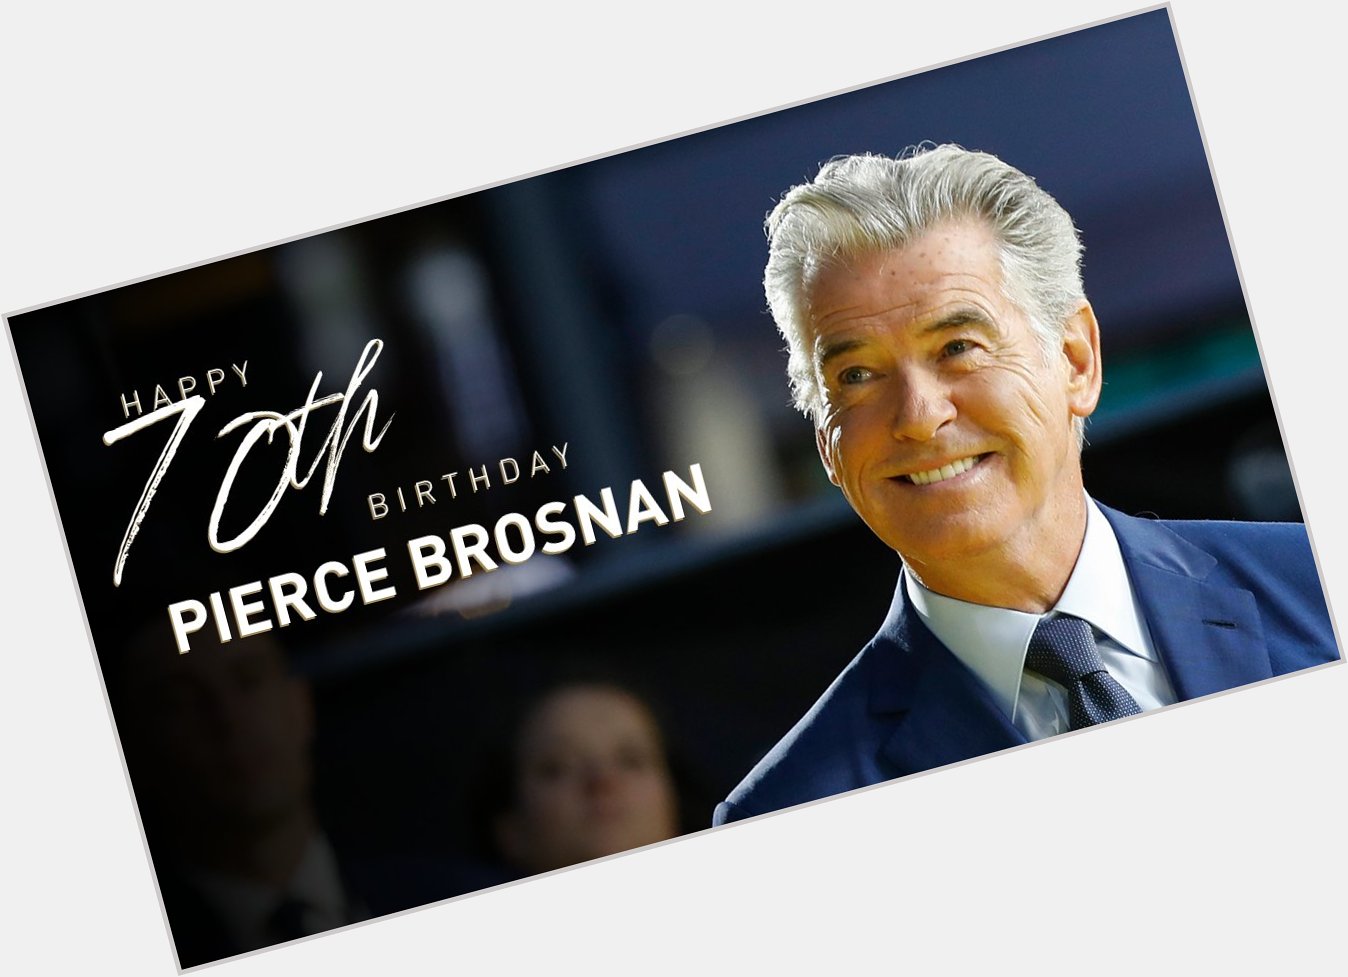 Happy 70th birthday Pierce Brosnan!

Read his tribute here:  